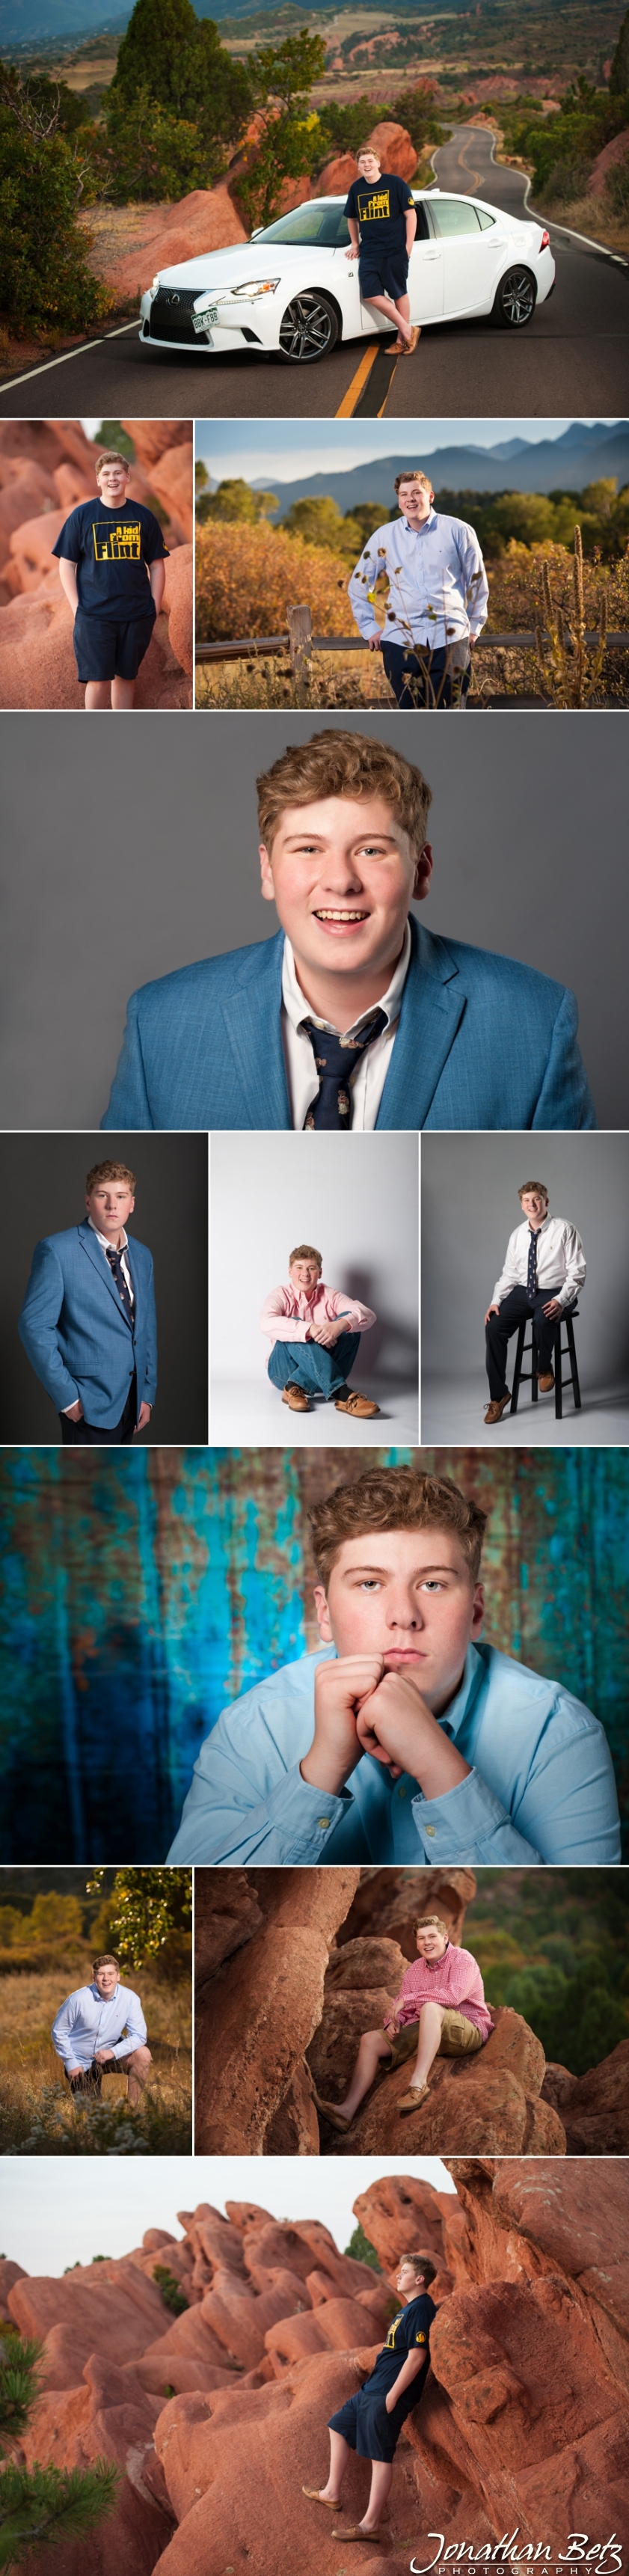 senior pictures Pine Creek High School Senior guy studio and outdoor portraits Colorado Springs Photographer